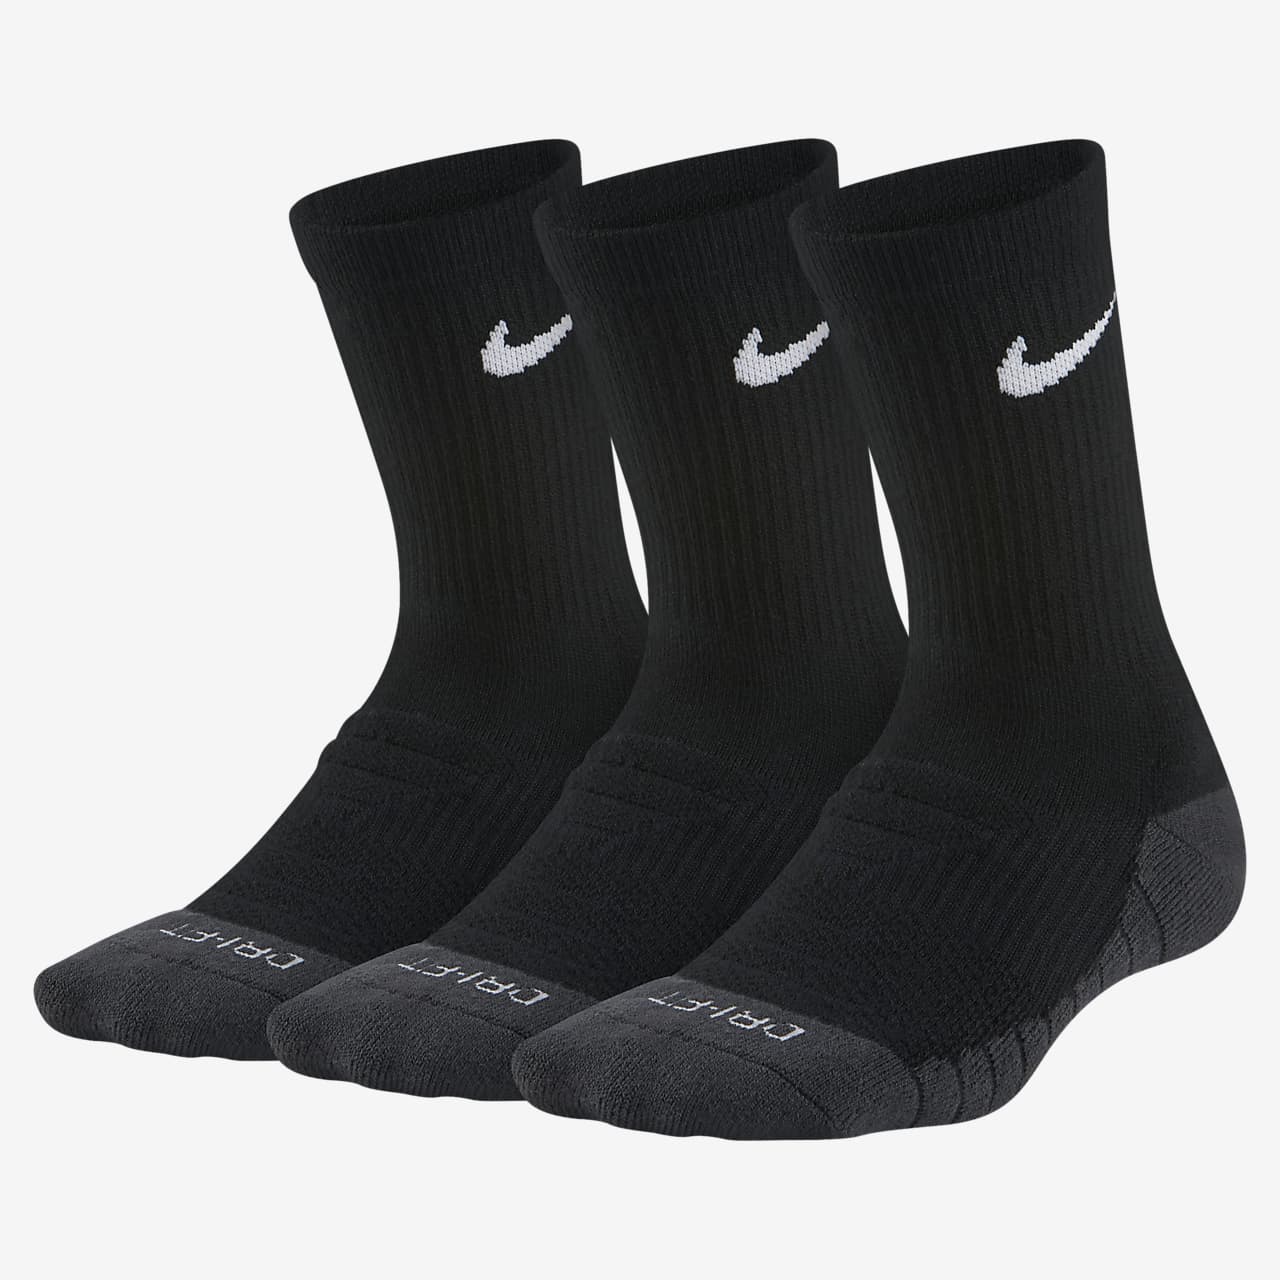 Calze Nike Dri-FIT Cushioned di media lunghezza - Bambini (3 paia). Nike IT